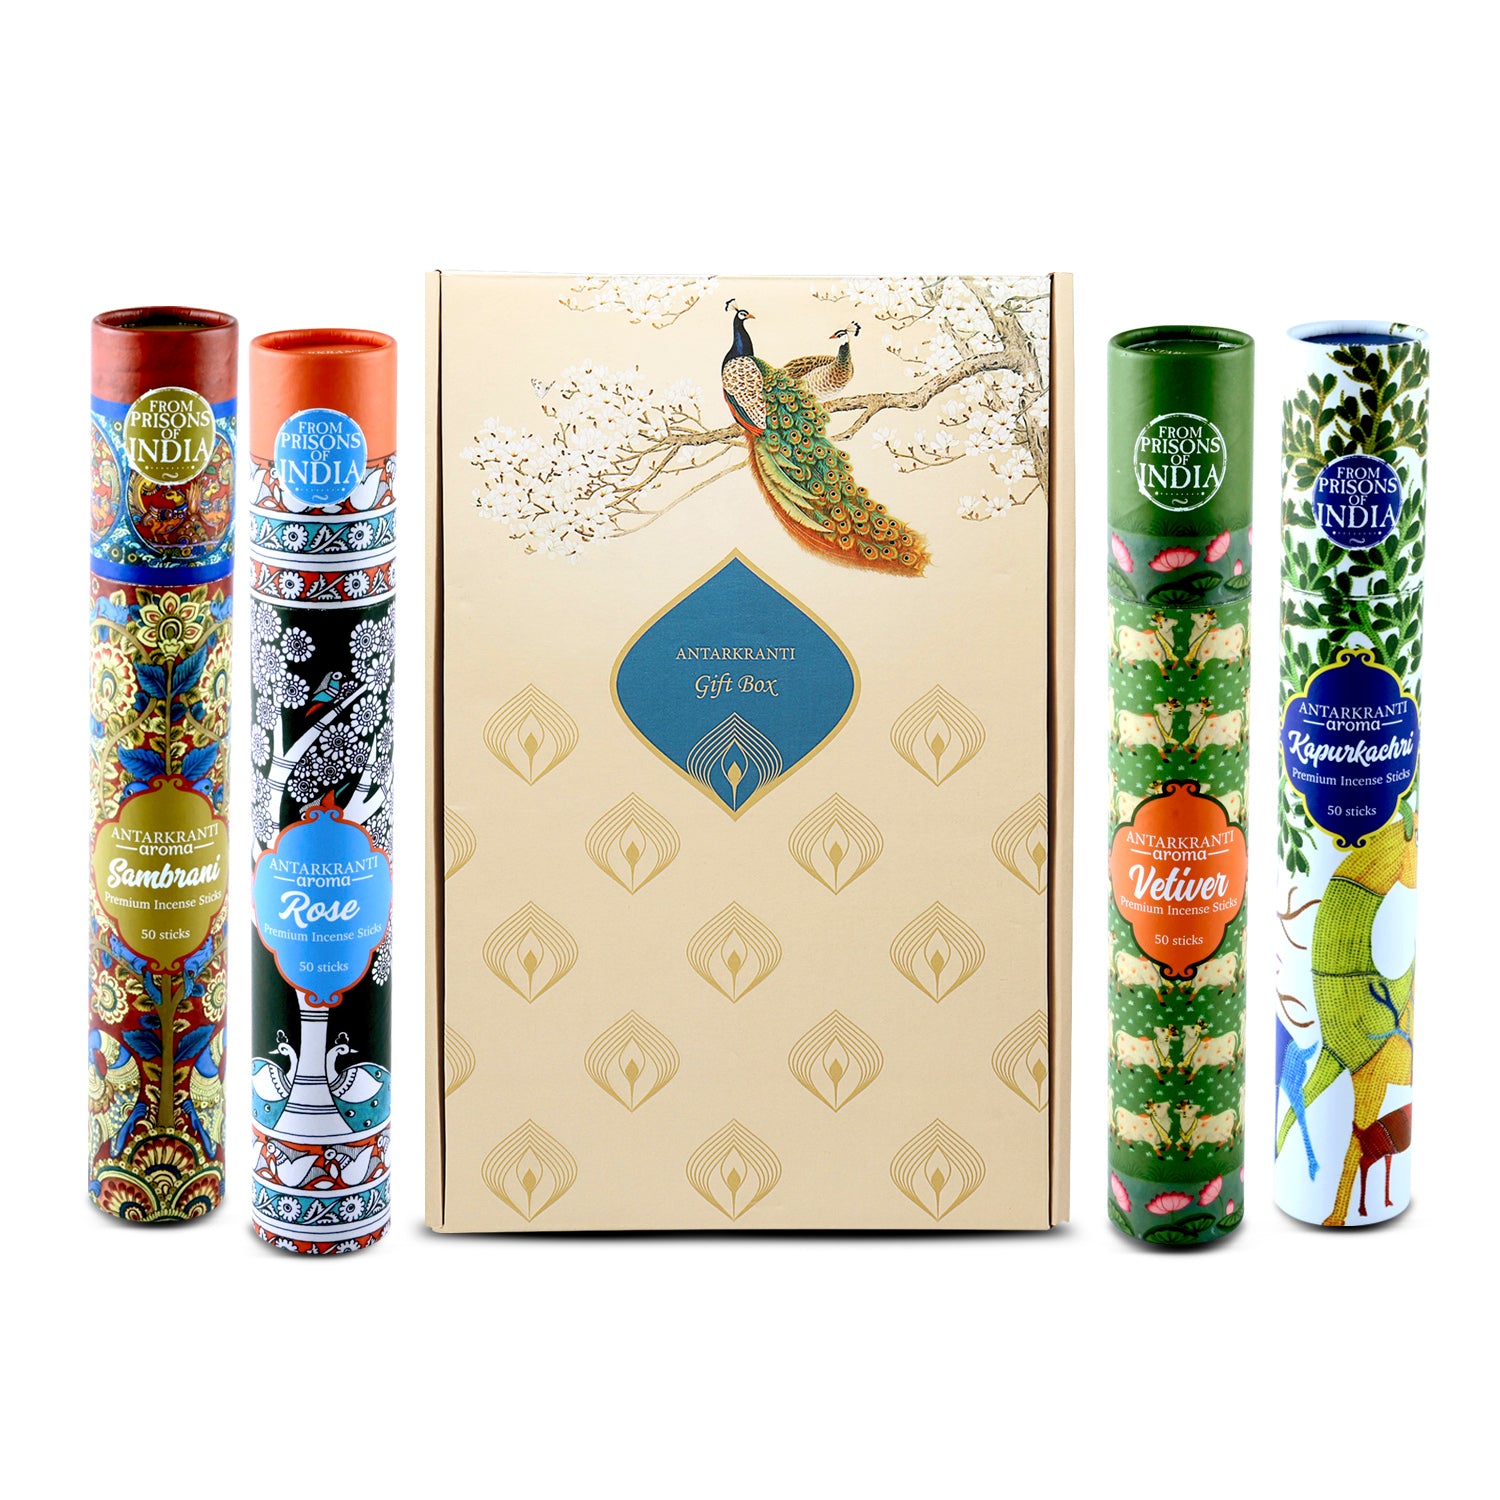 Antarkranti Meditation Incense Pack | Pack of 4 Low Smoke, 200 Premium Incense Sticks | Rose, Sambrani, Vetiver, Kapurkachri